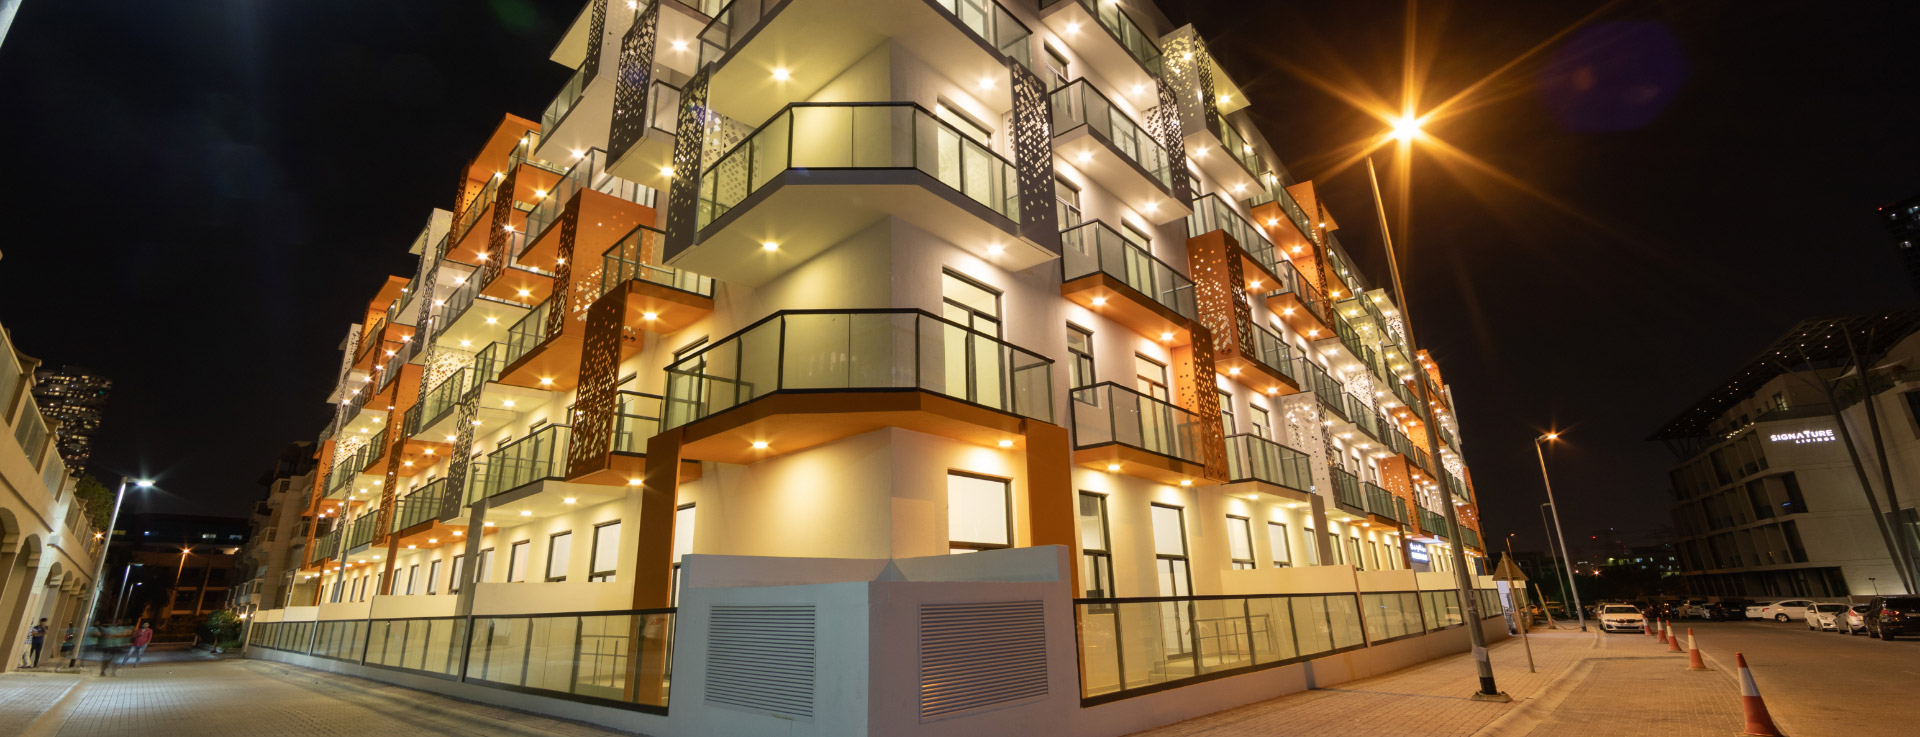 Binghatti Mirage Apartments for Sale in Dubai, Jumeirah Village Circle (JVC)